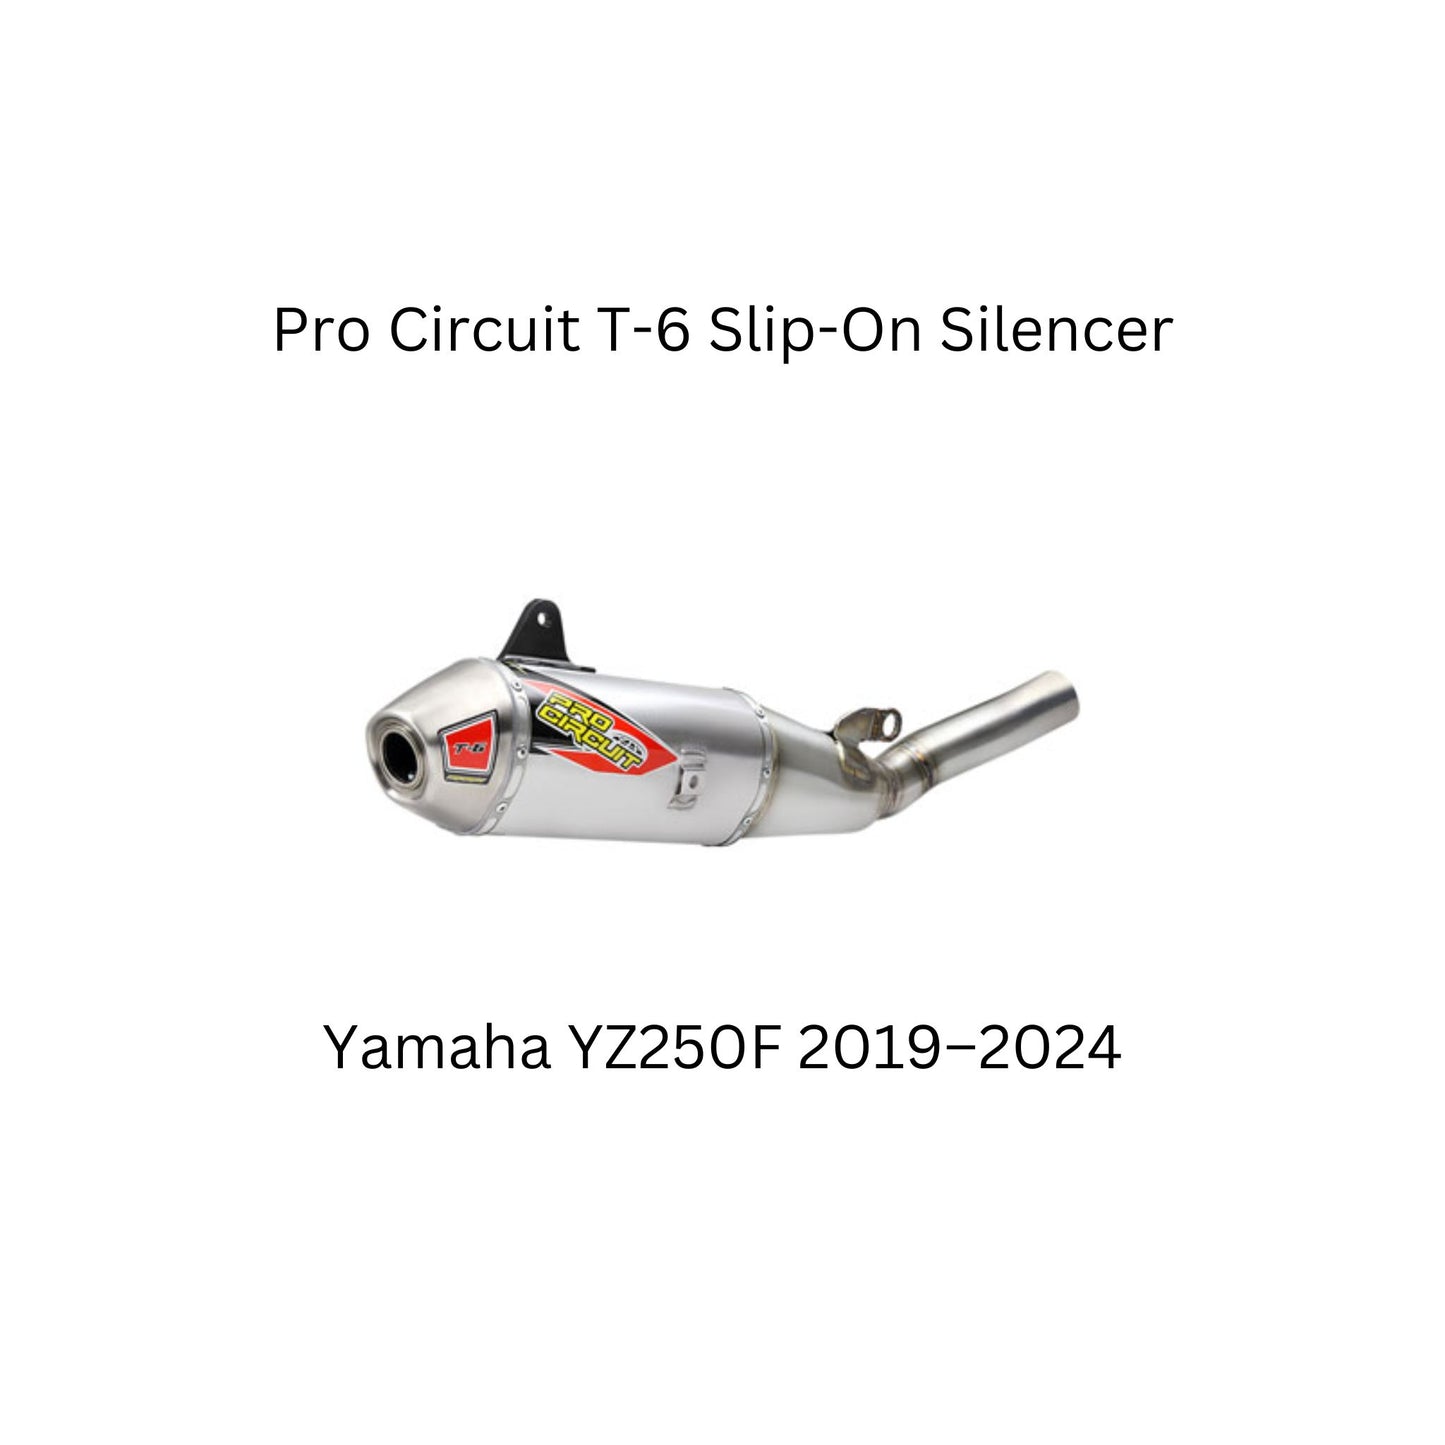 Pro Circuit T-6 Slip-On Silencer